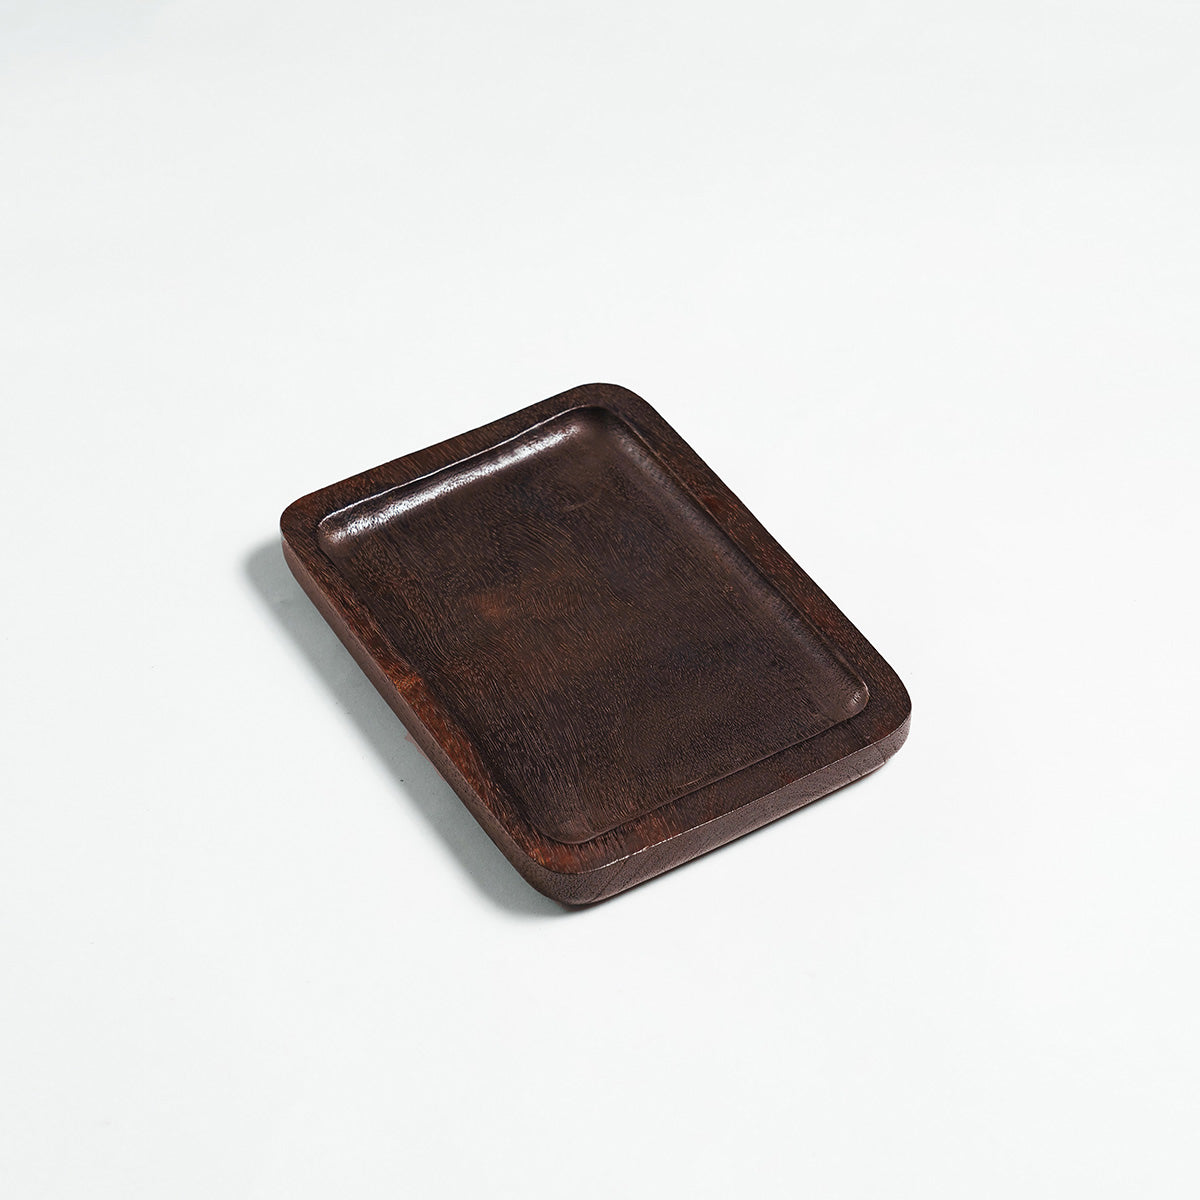 Small Dark wood tray, round edged rustic serving tray, farmhouse decor, 5X7 inches